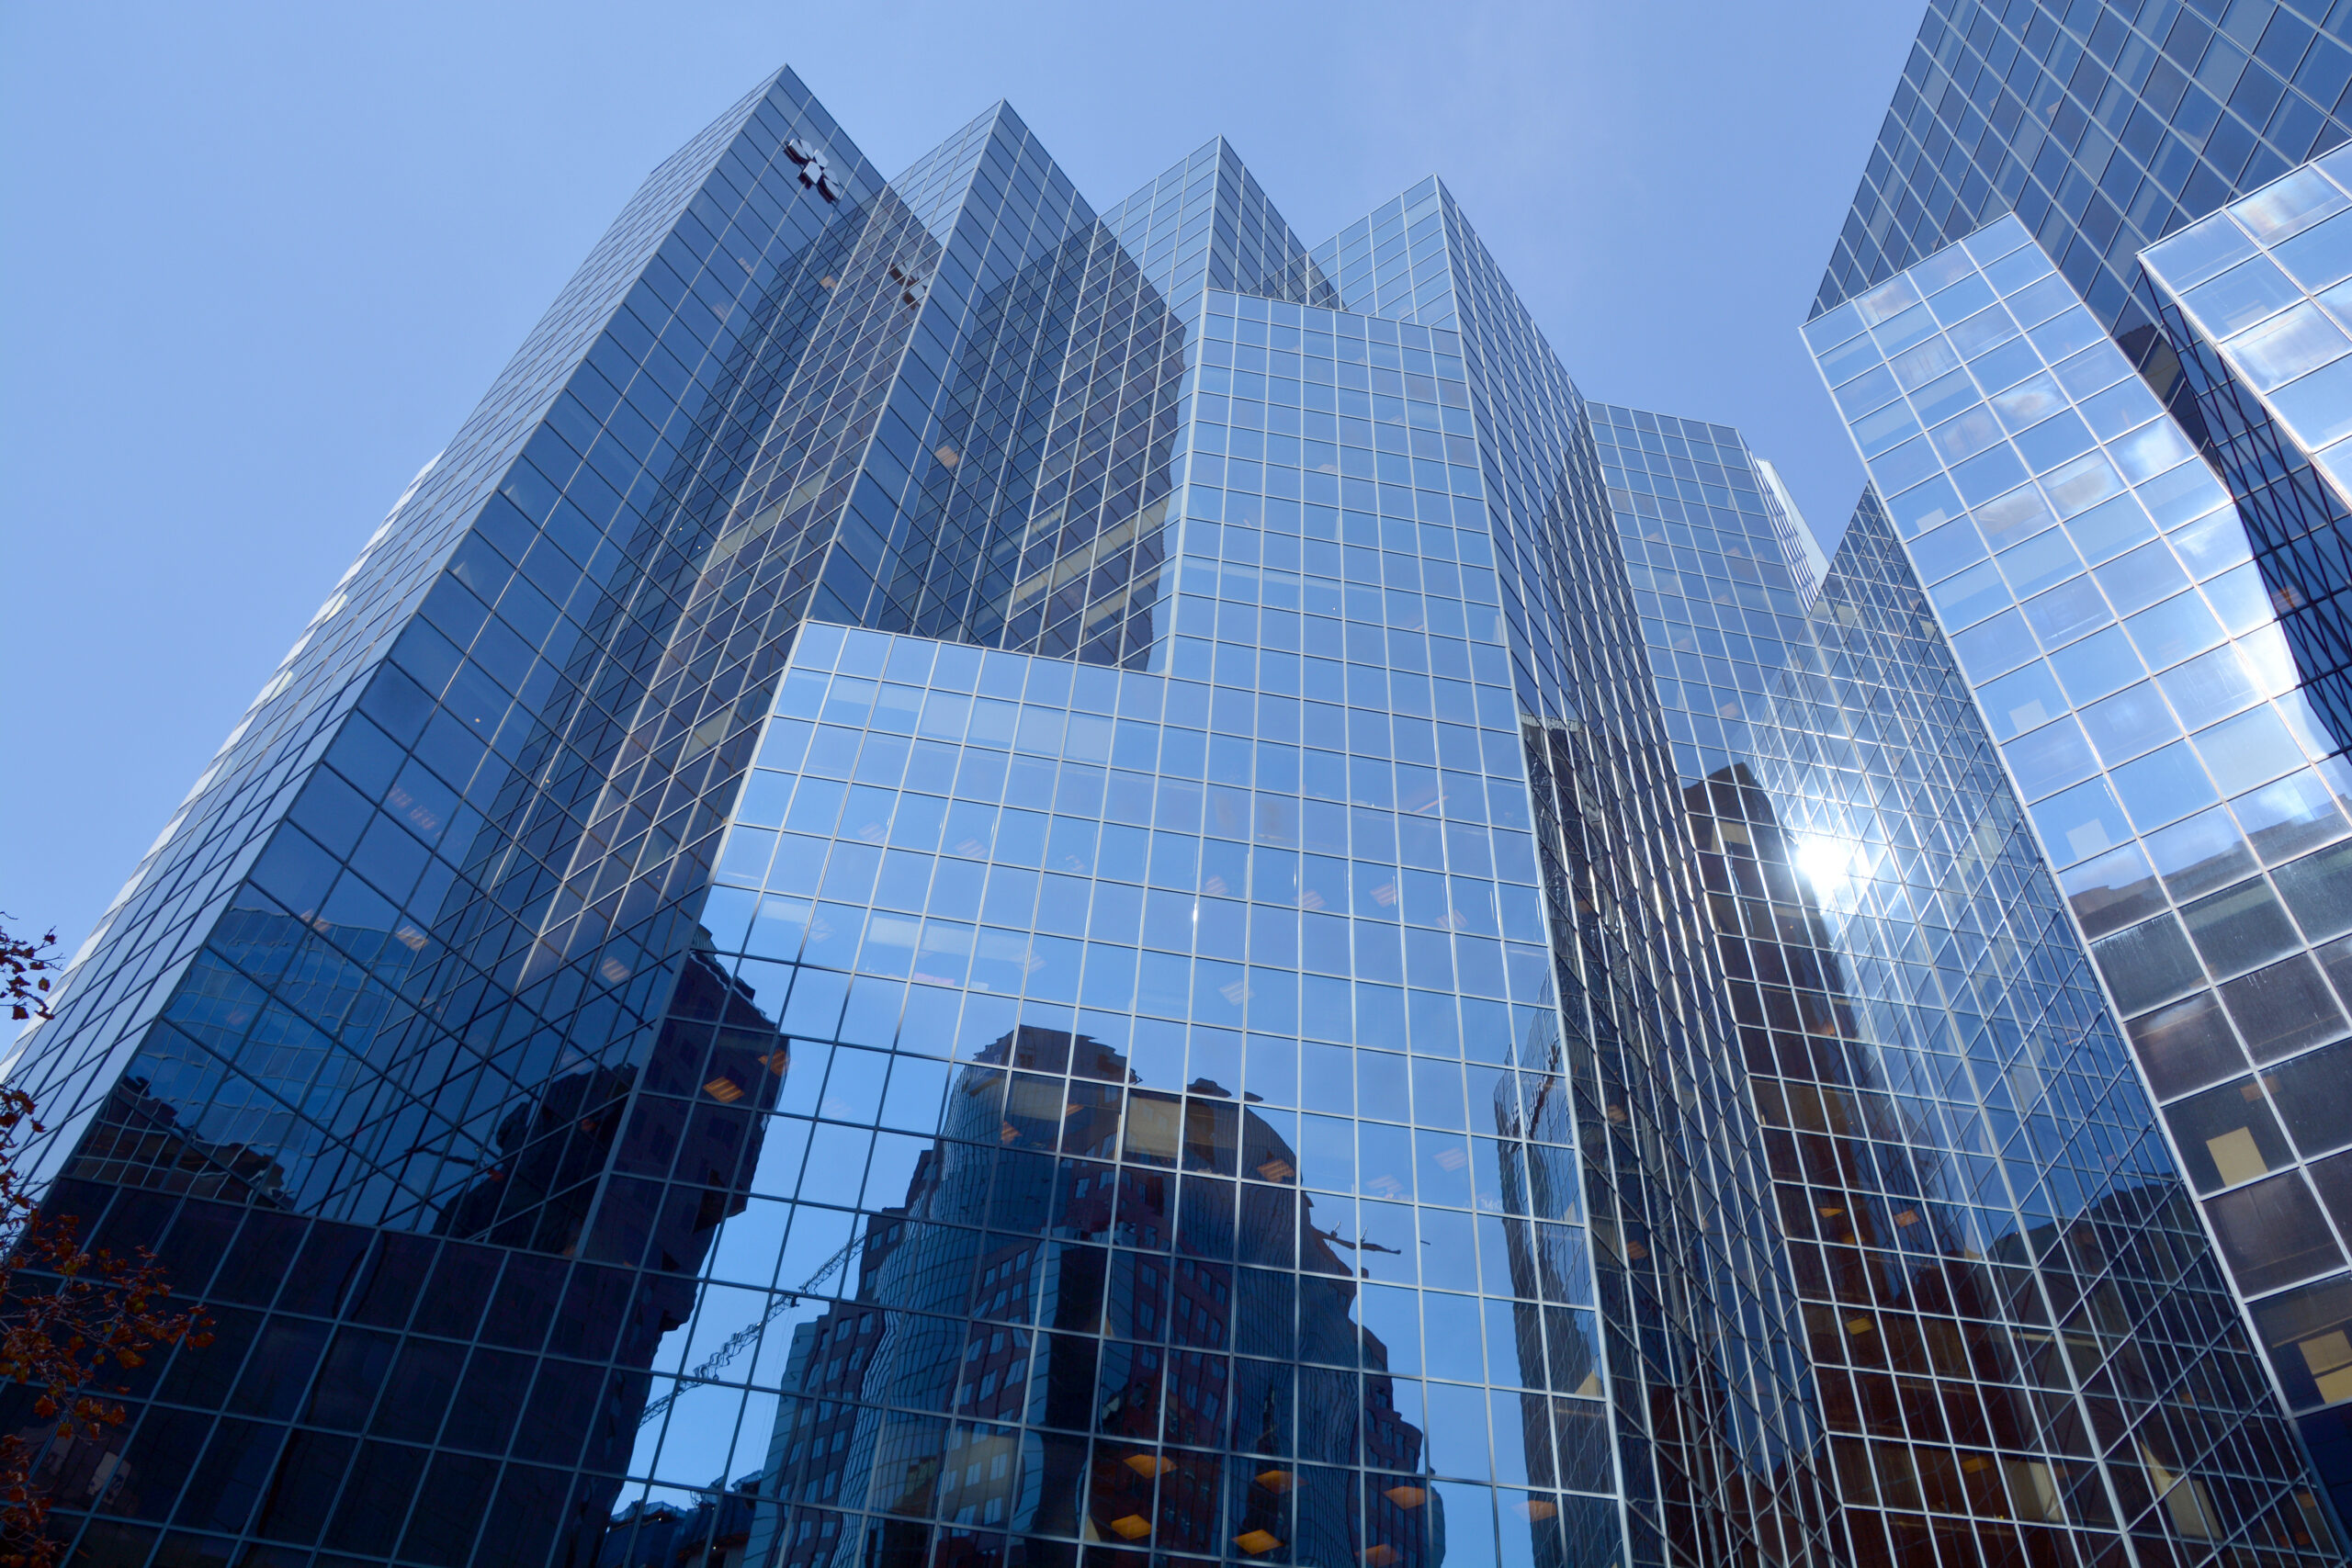 buildings resembling rectangular prisms